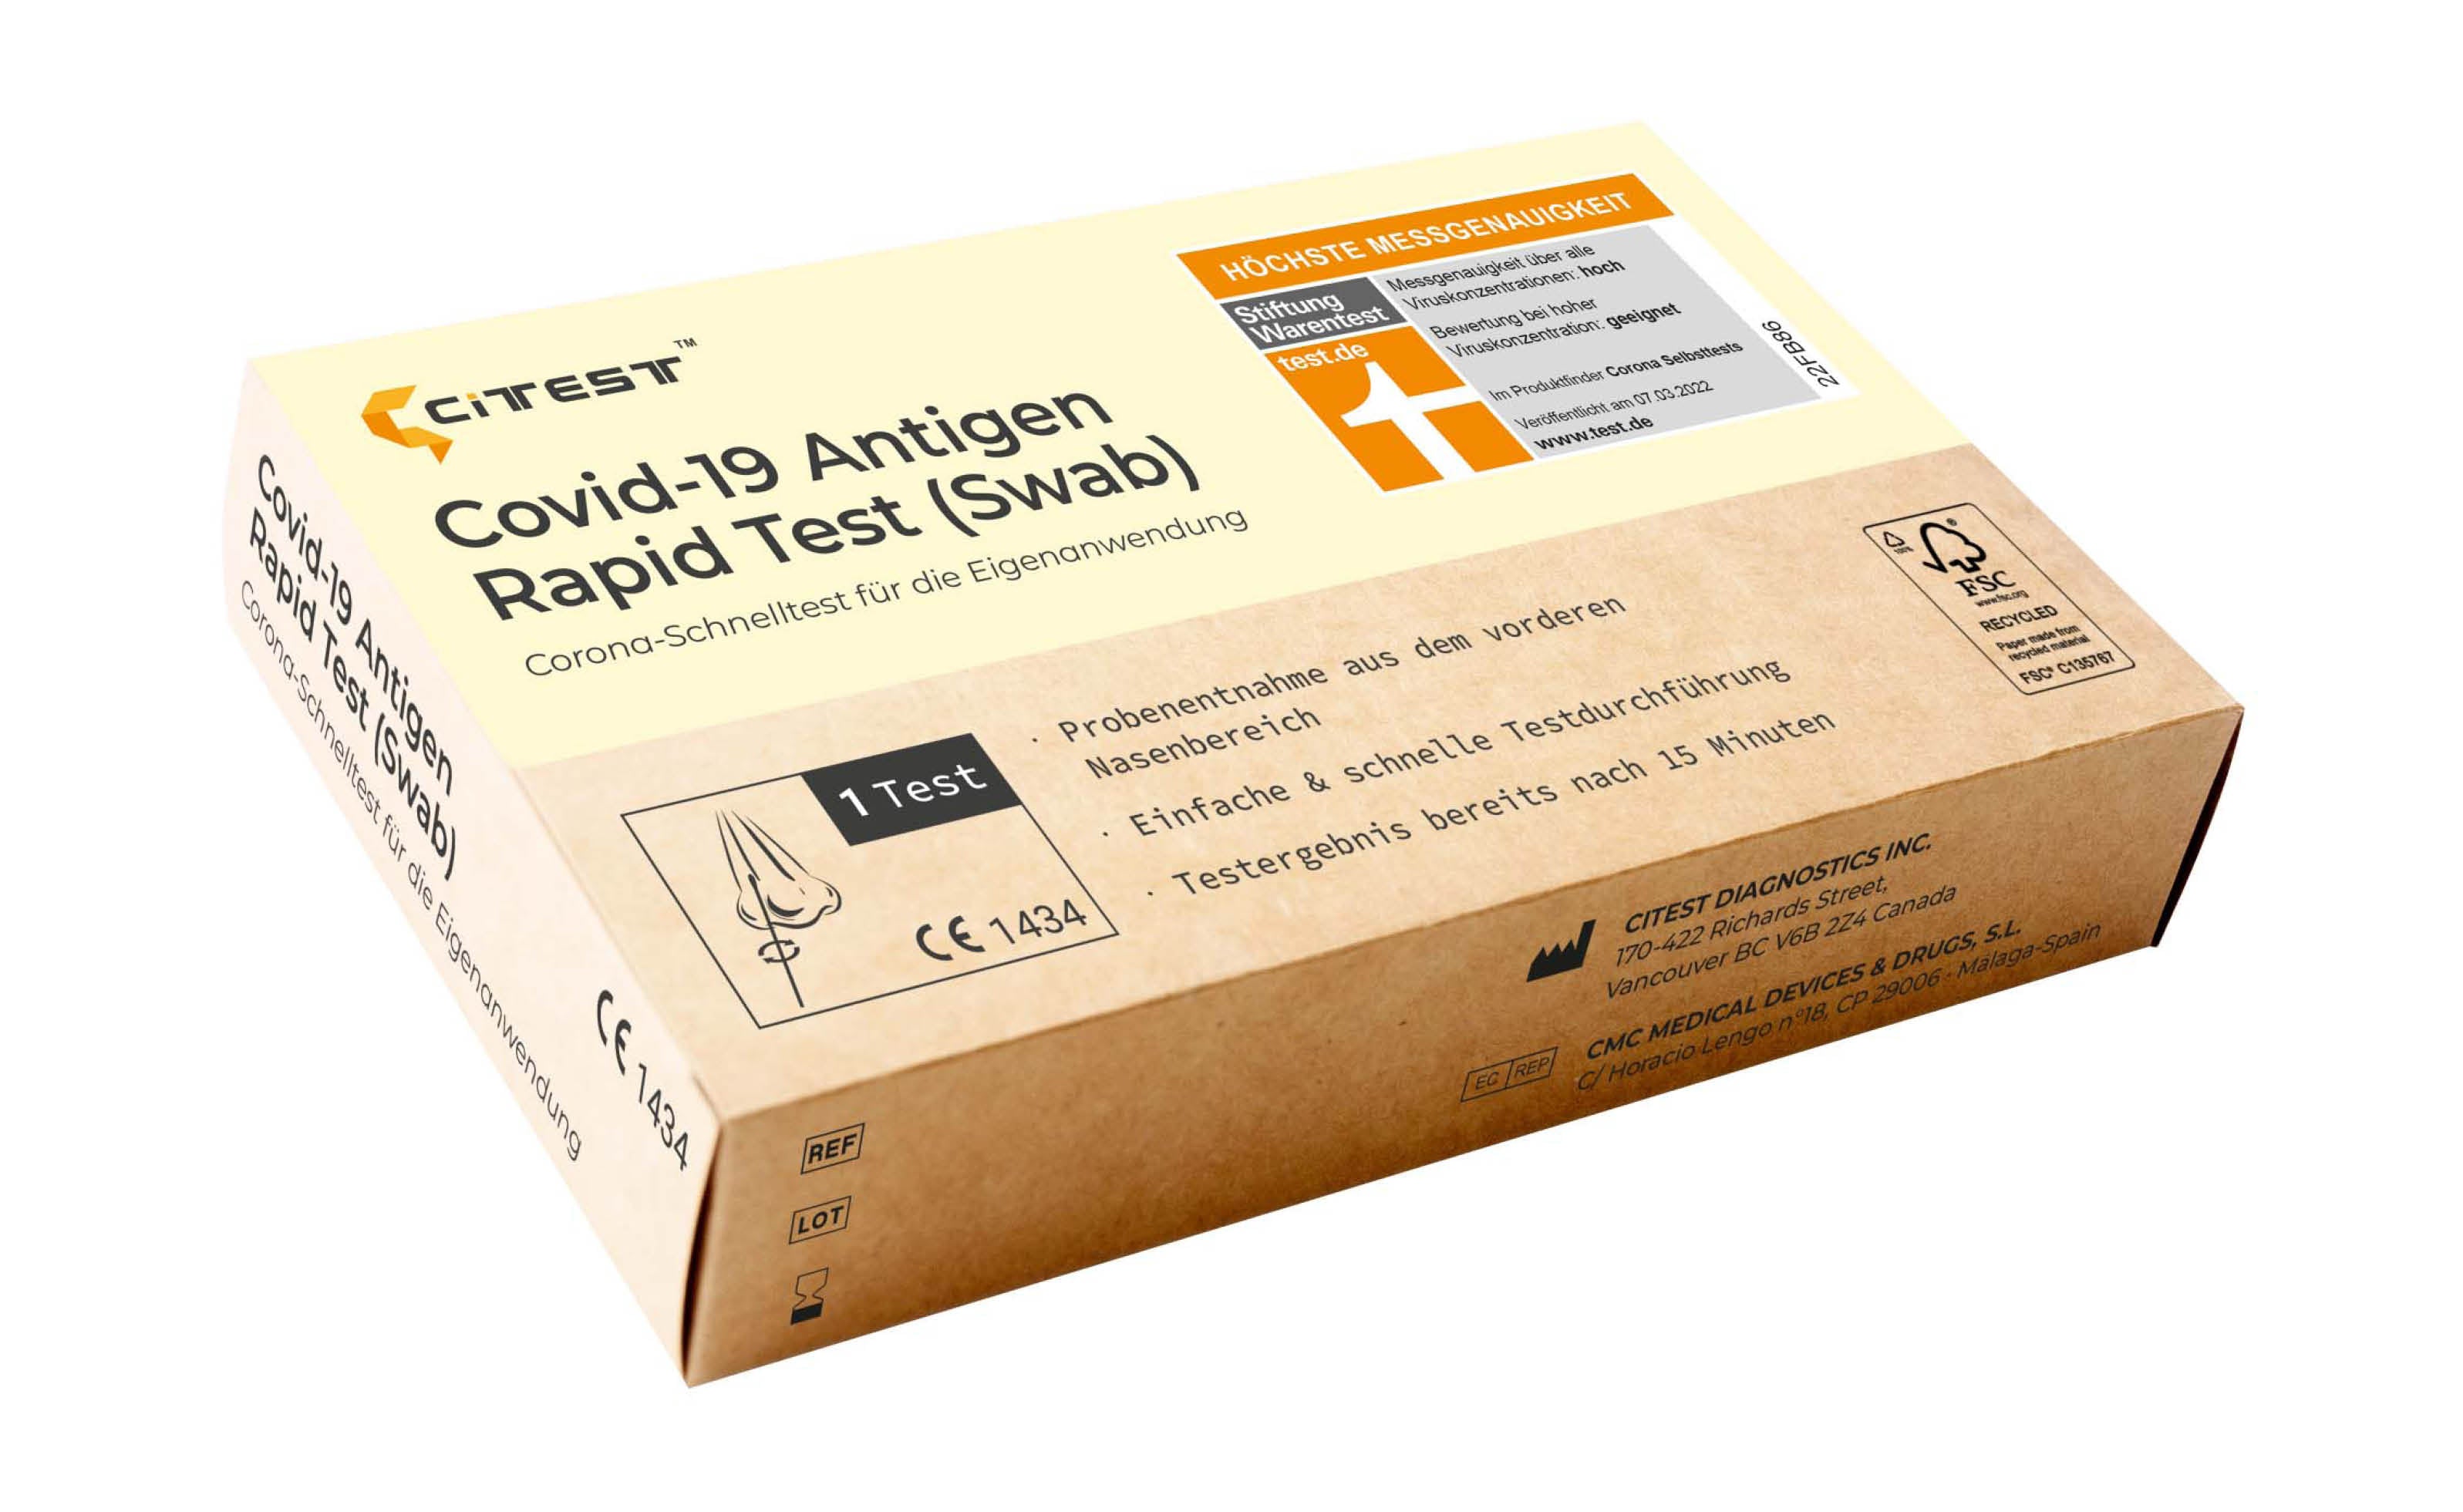 Citest Diagnostics COVID-19 Antigen Rapid Test (Swab) –